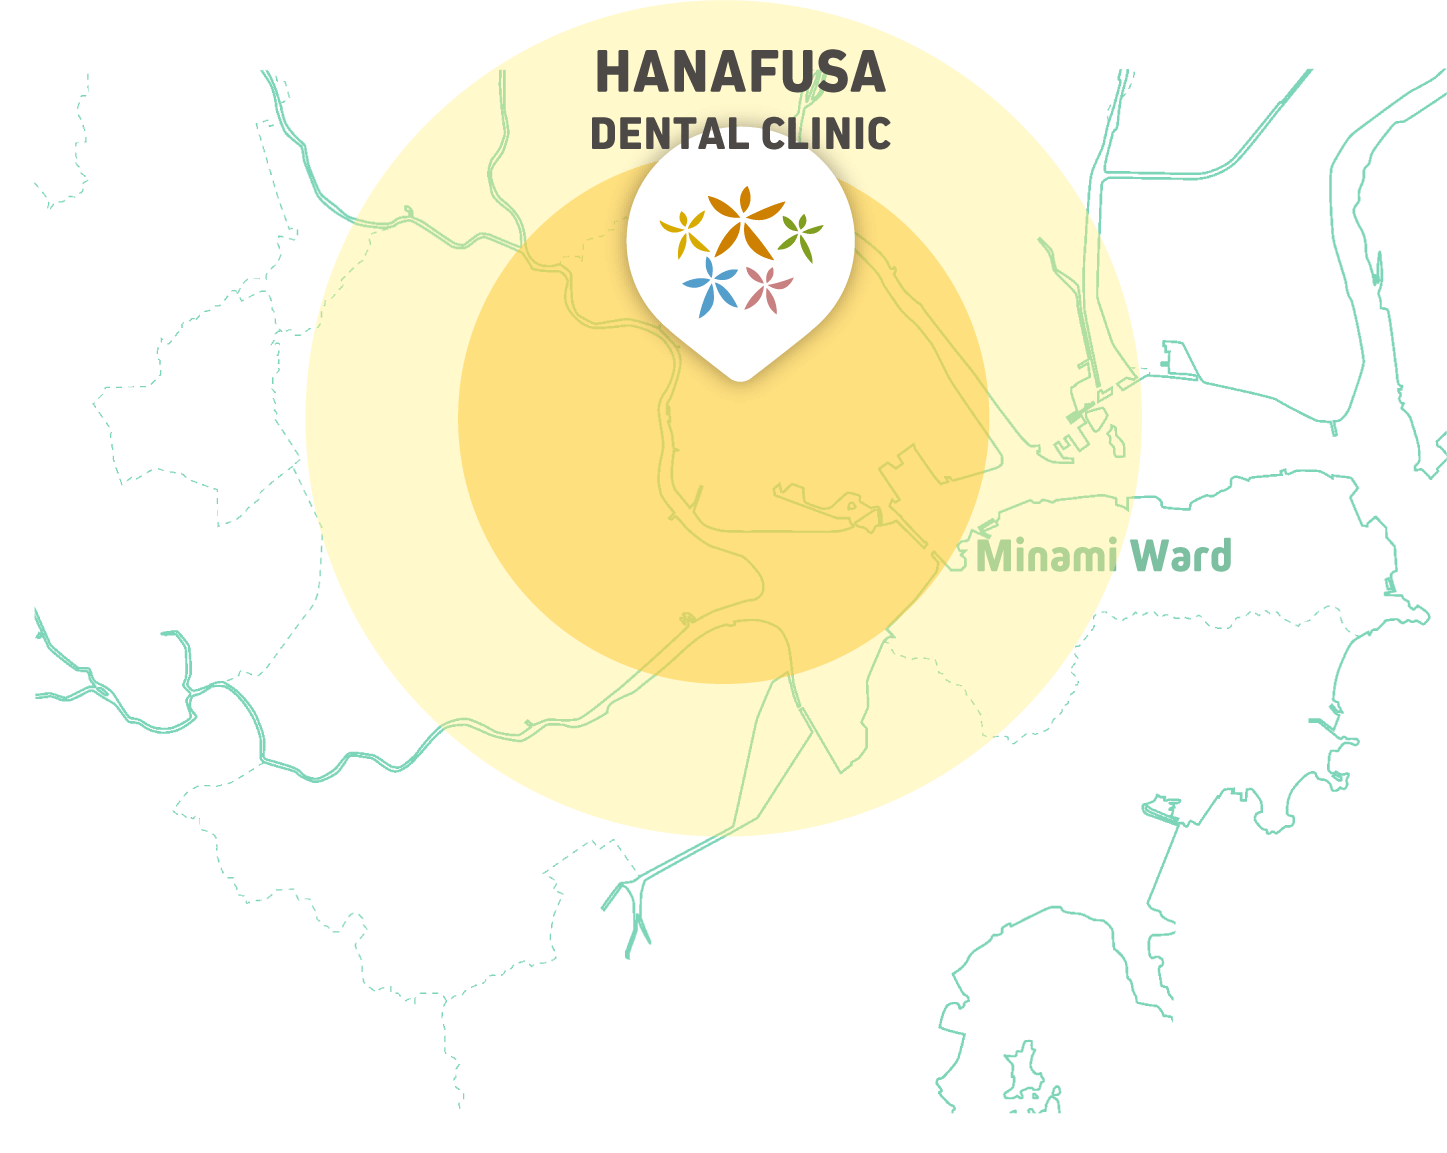 HANAFUSA DENTAL CLINIC Map